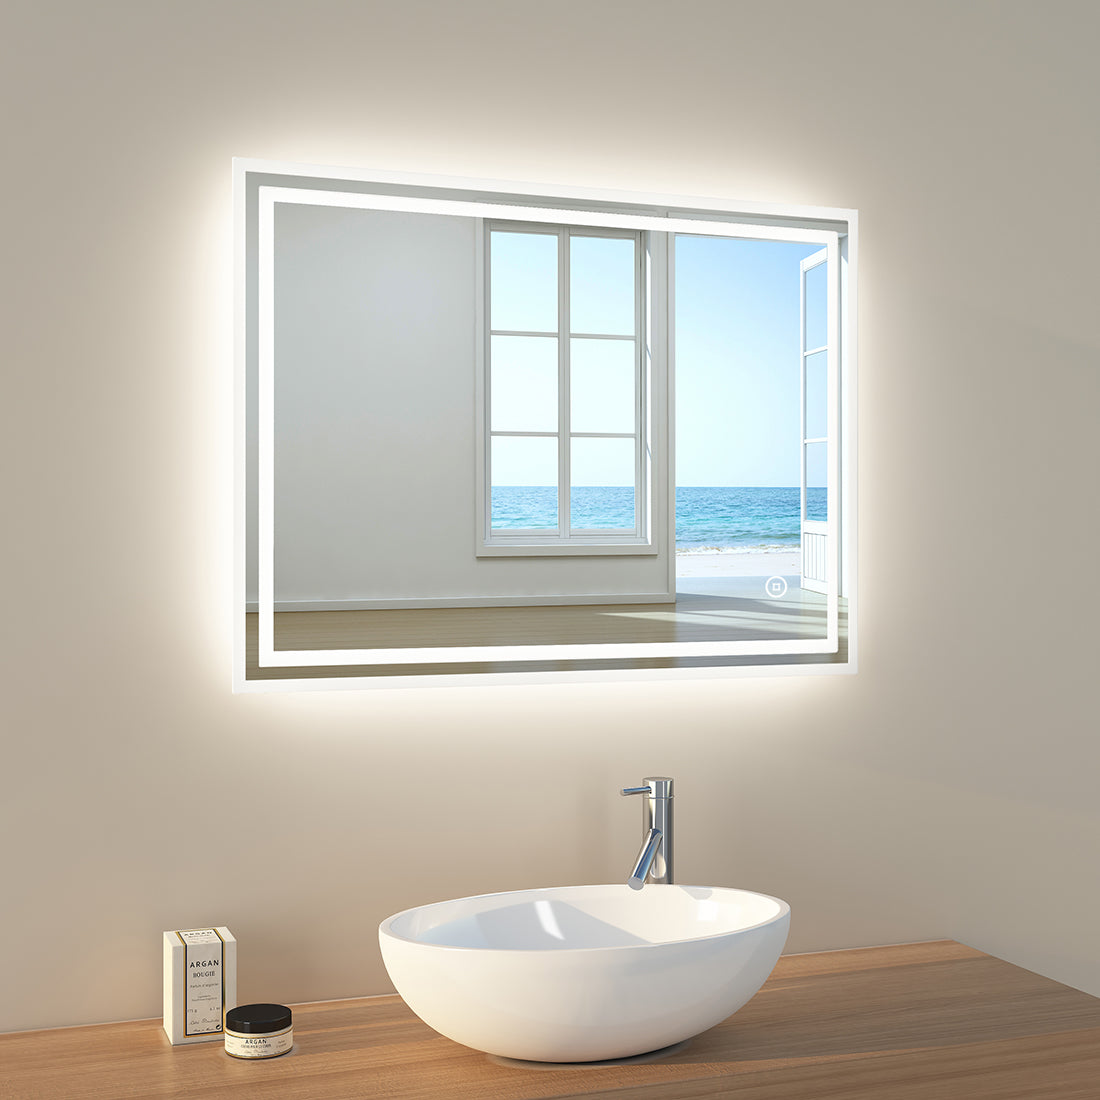 EMKE Badspiegel mit Beleuchtung mit Berührungssensor – Dimmung – Farbwechsel Beschlagfrei – 80 * 60 cm